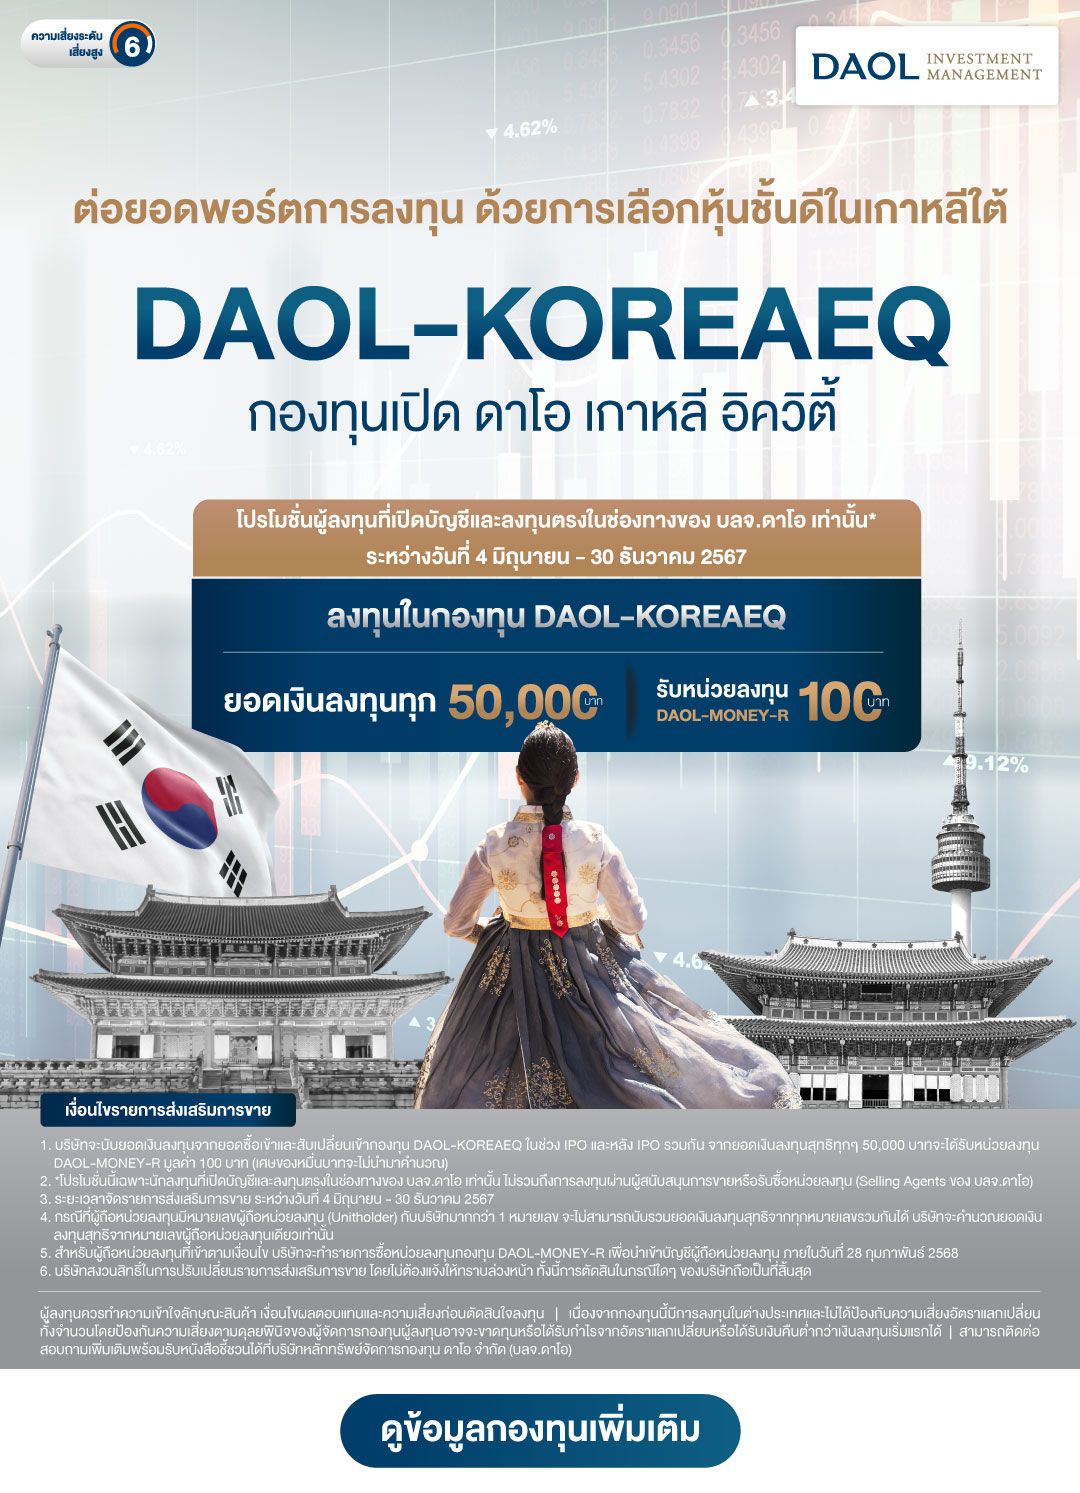 Daol Koreaeq Promotion for Web